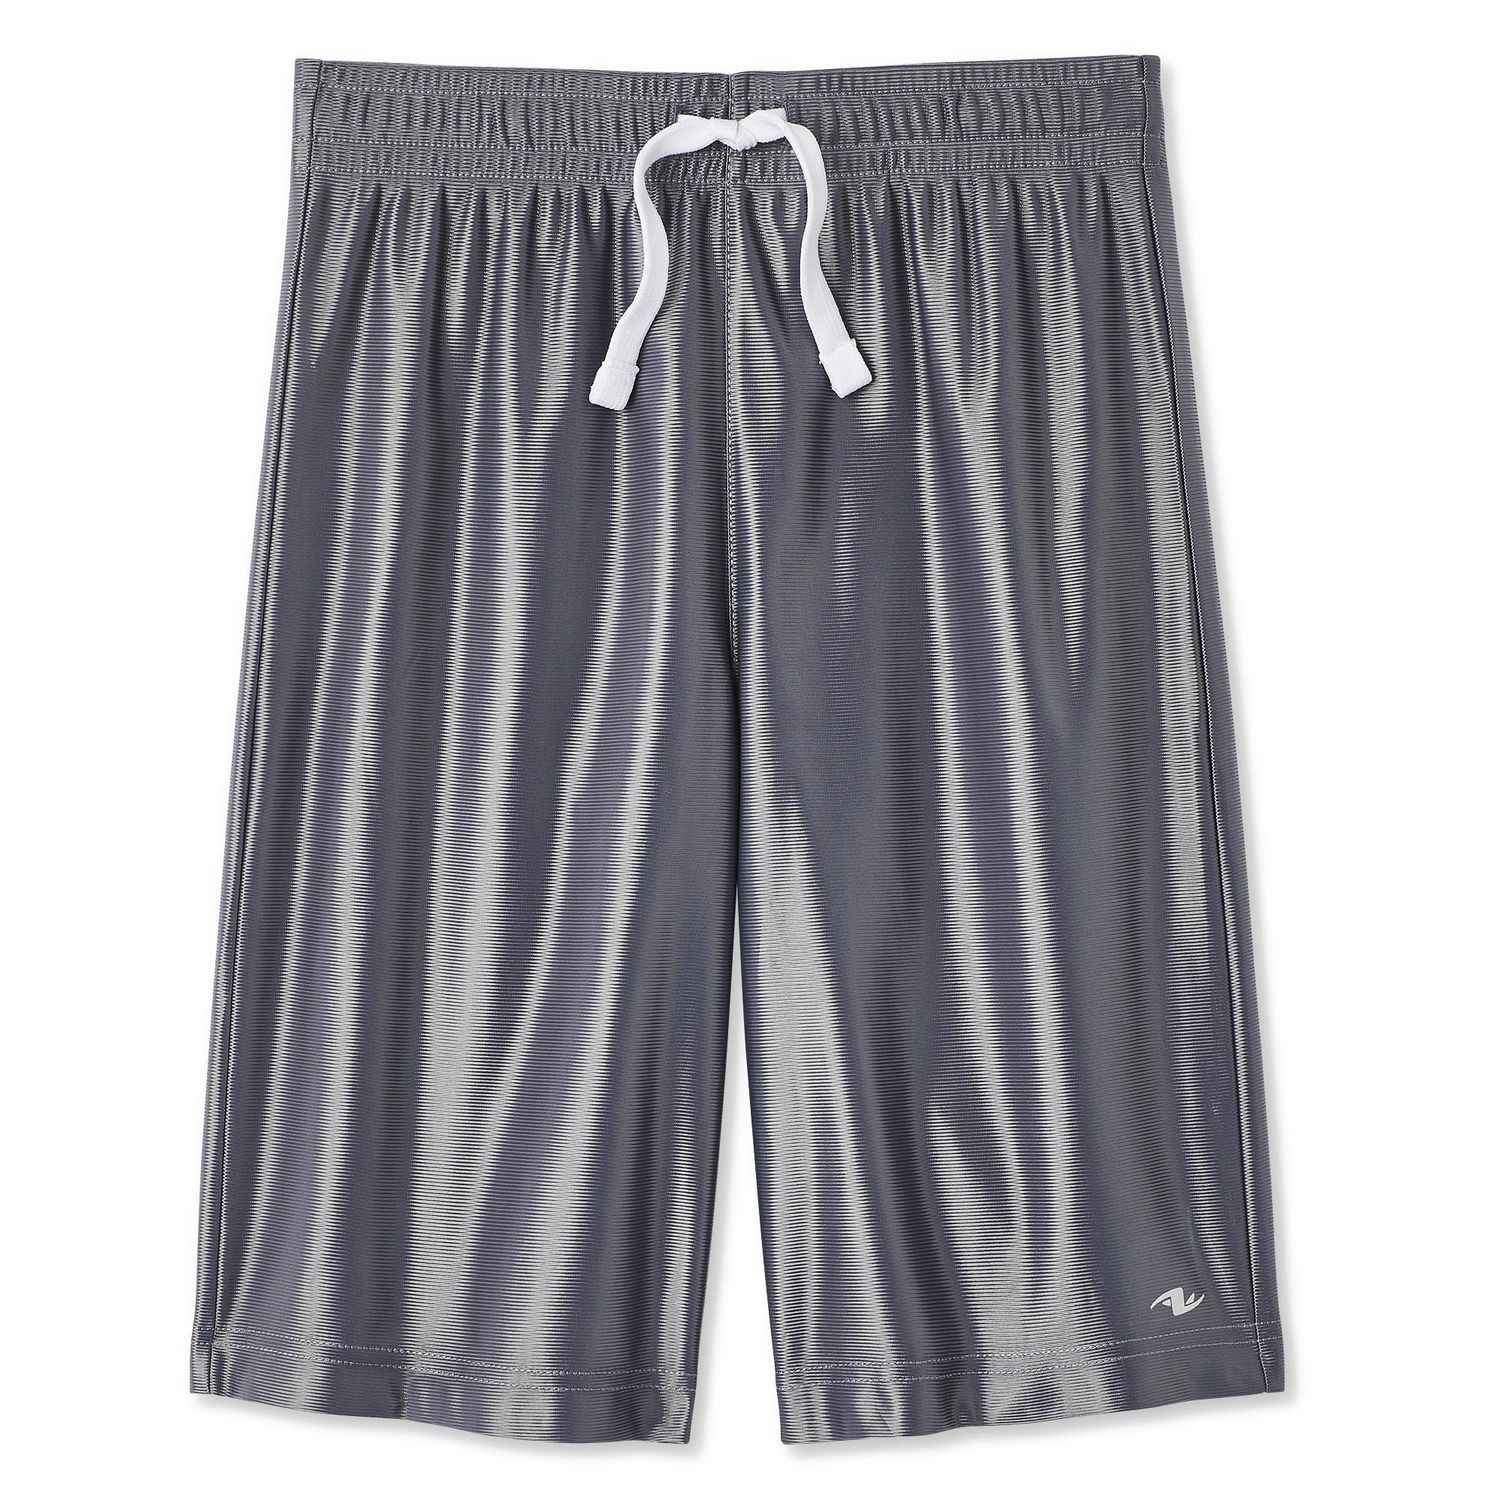 STX Little Boys' Dazzle Shorts, Charcoal/Orange, 5/6 